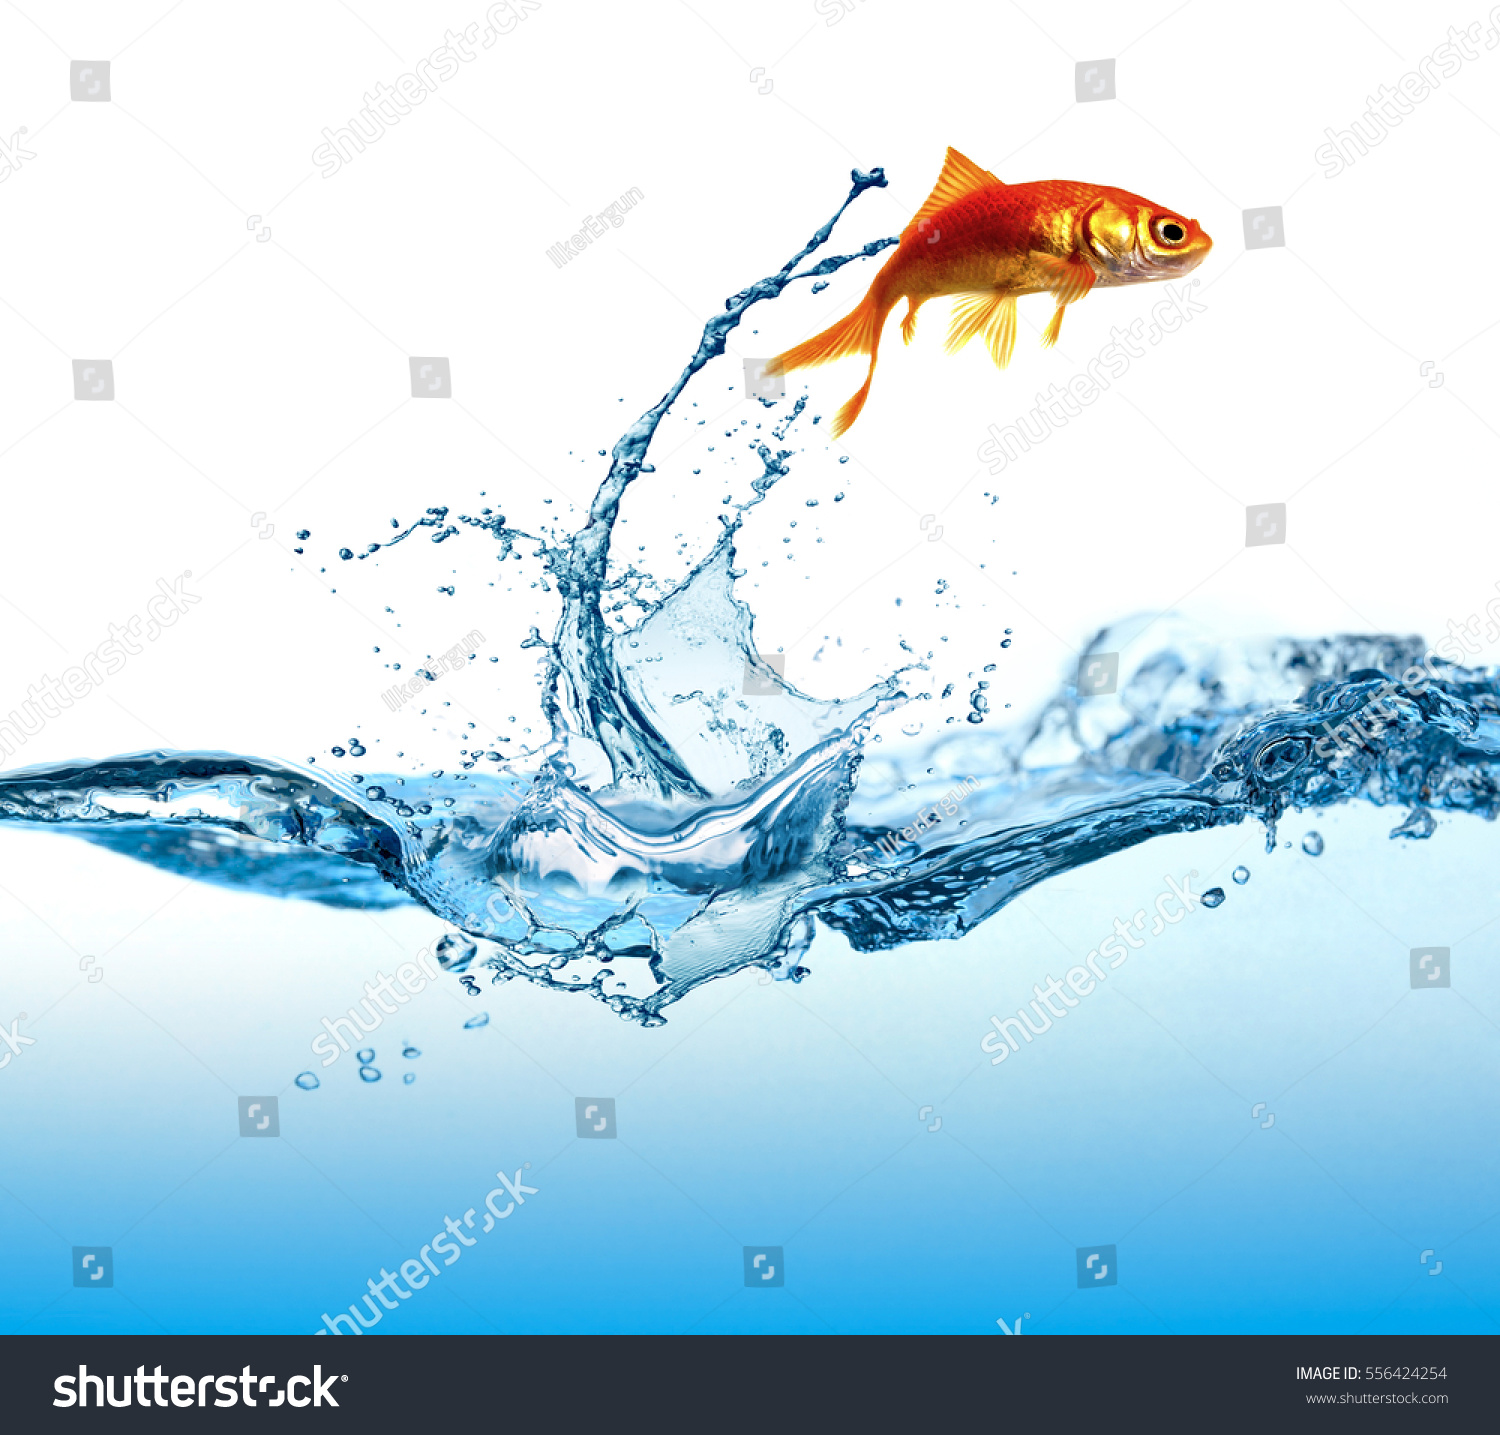 Fish Jumping Stock Photo 556424254 - Shutterstock